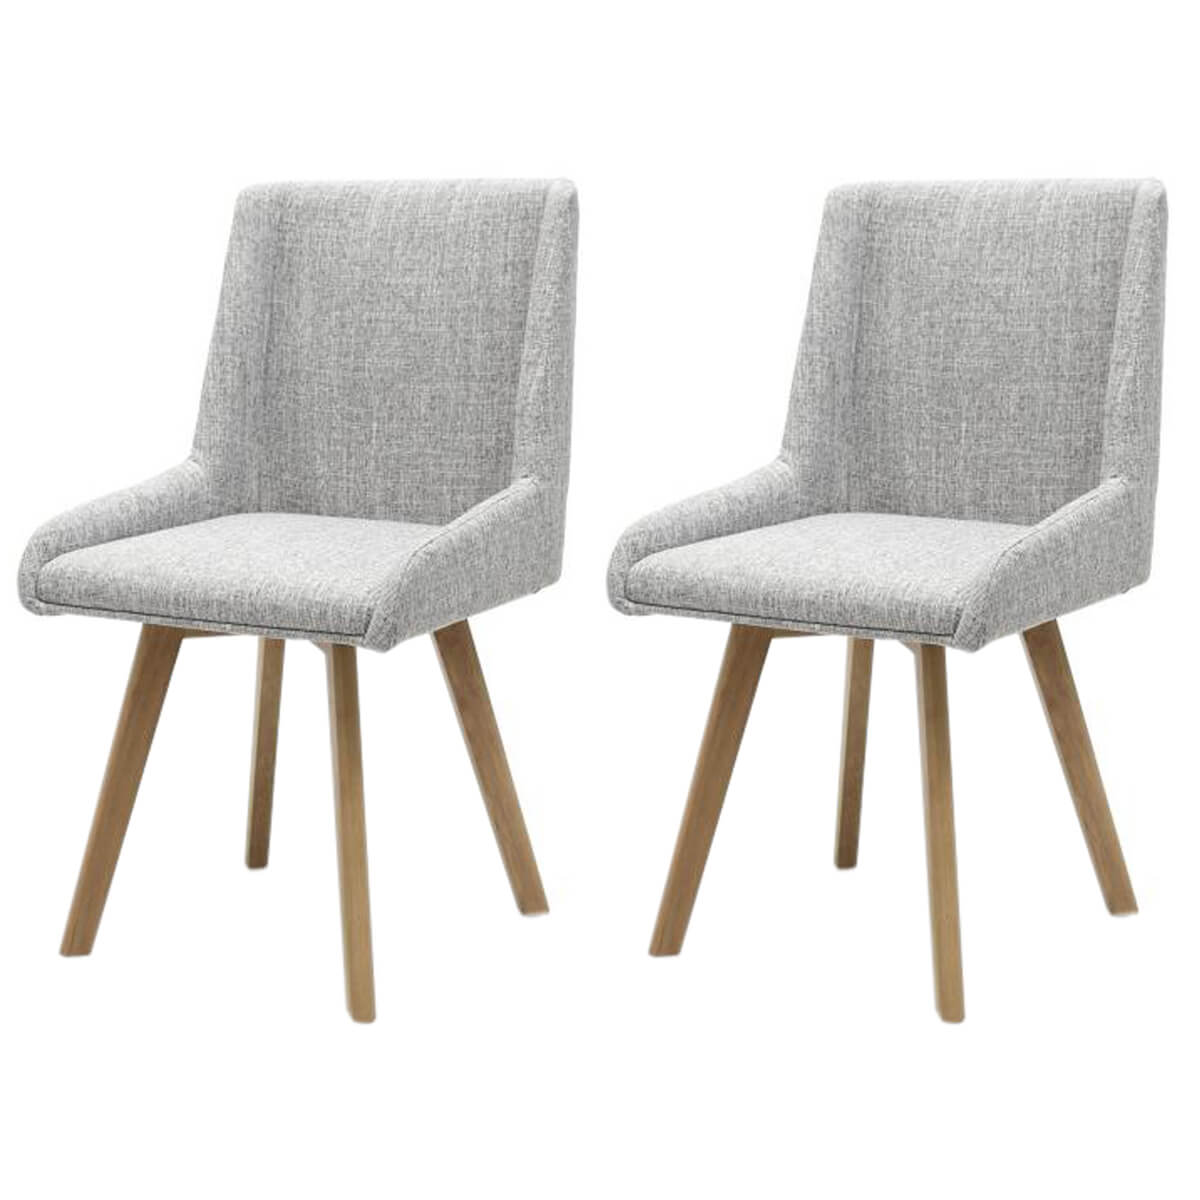 Skandi Grey Fabric Dining Chairs Wooden, Grey Dining Chairs Wooden Legs